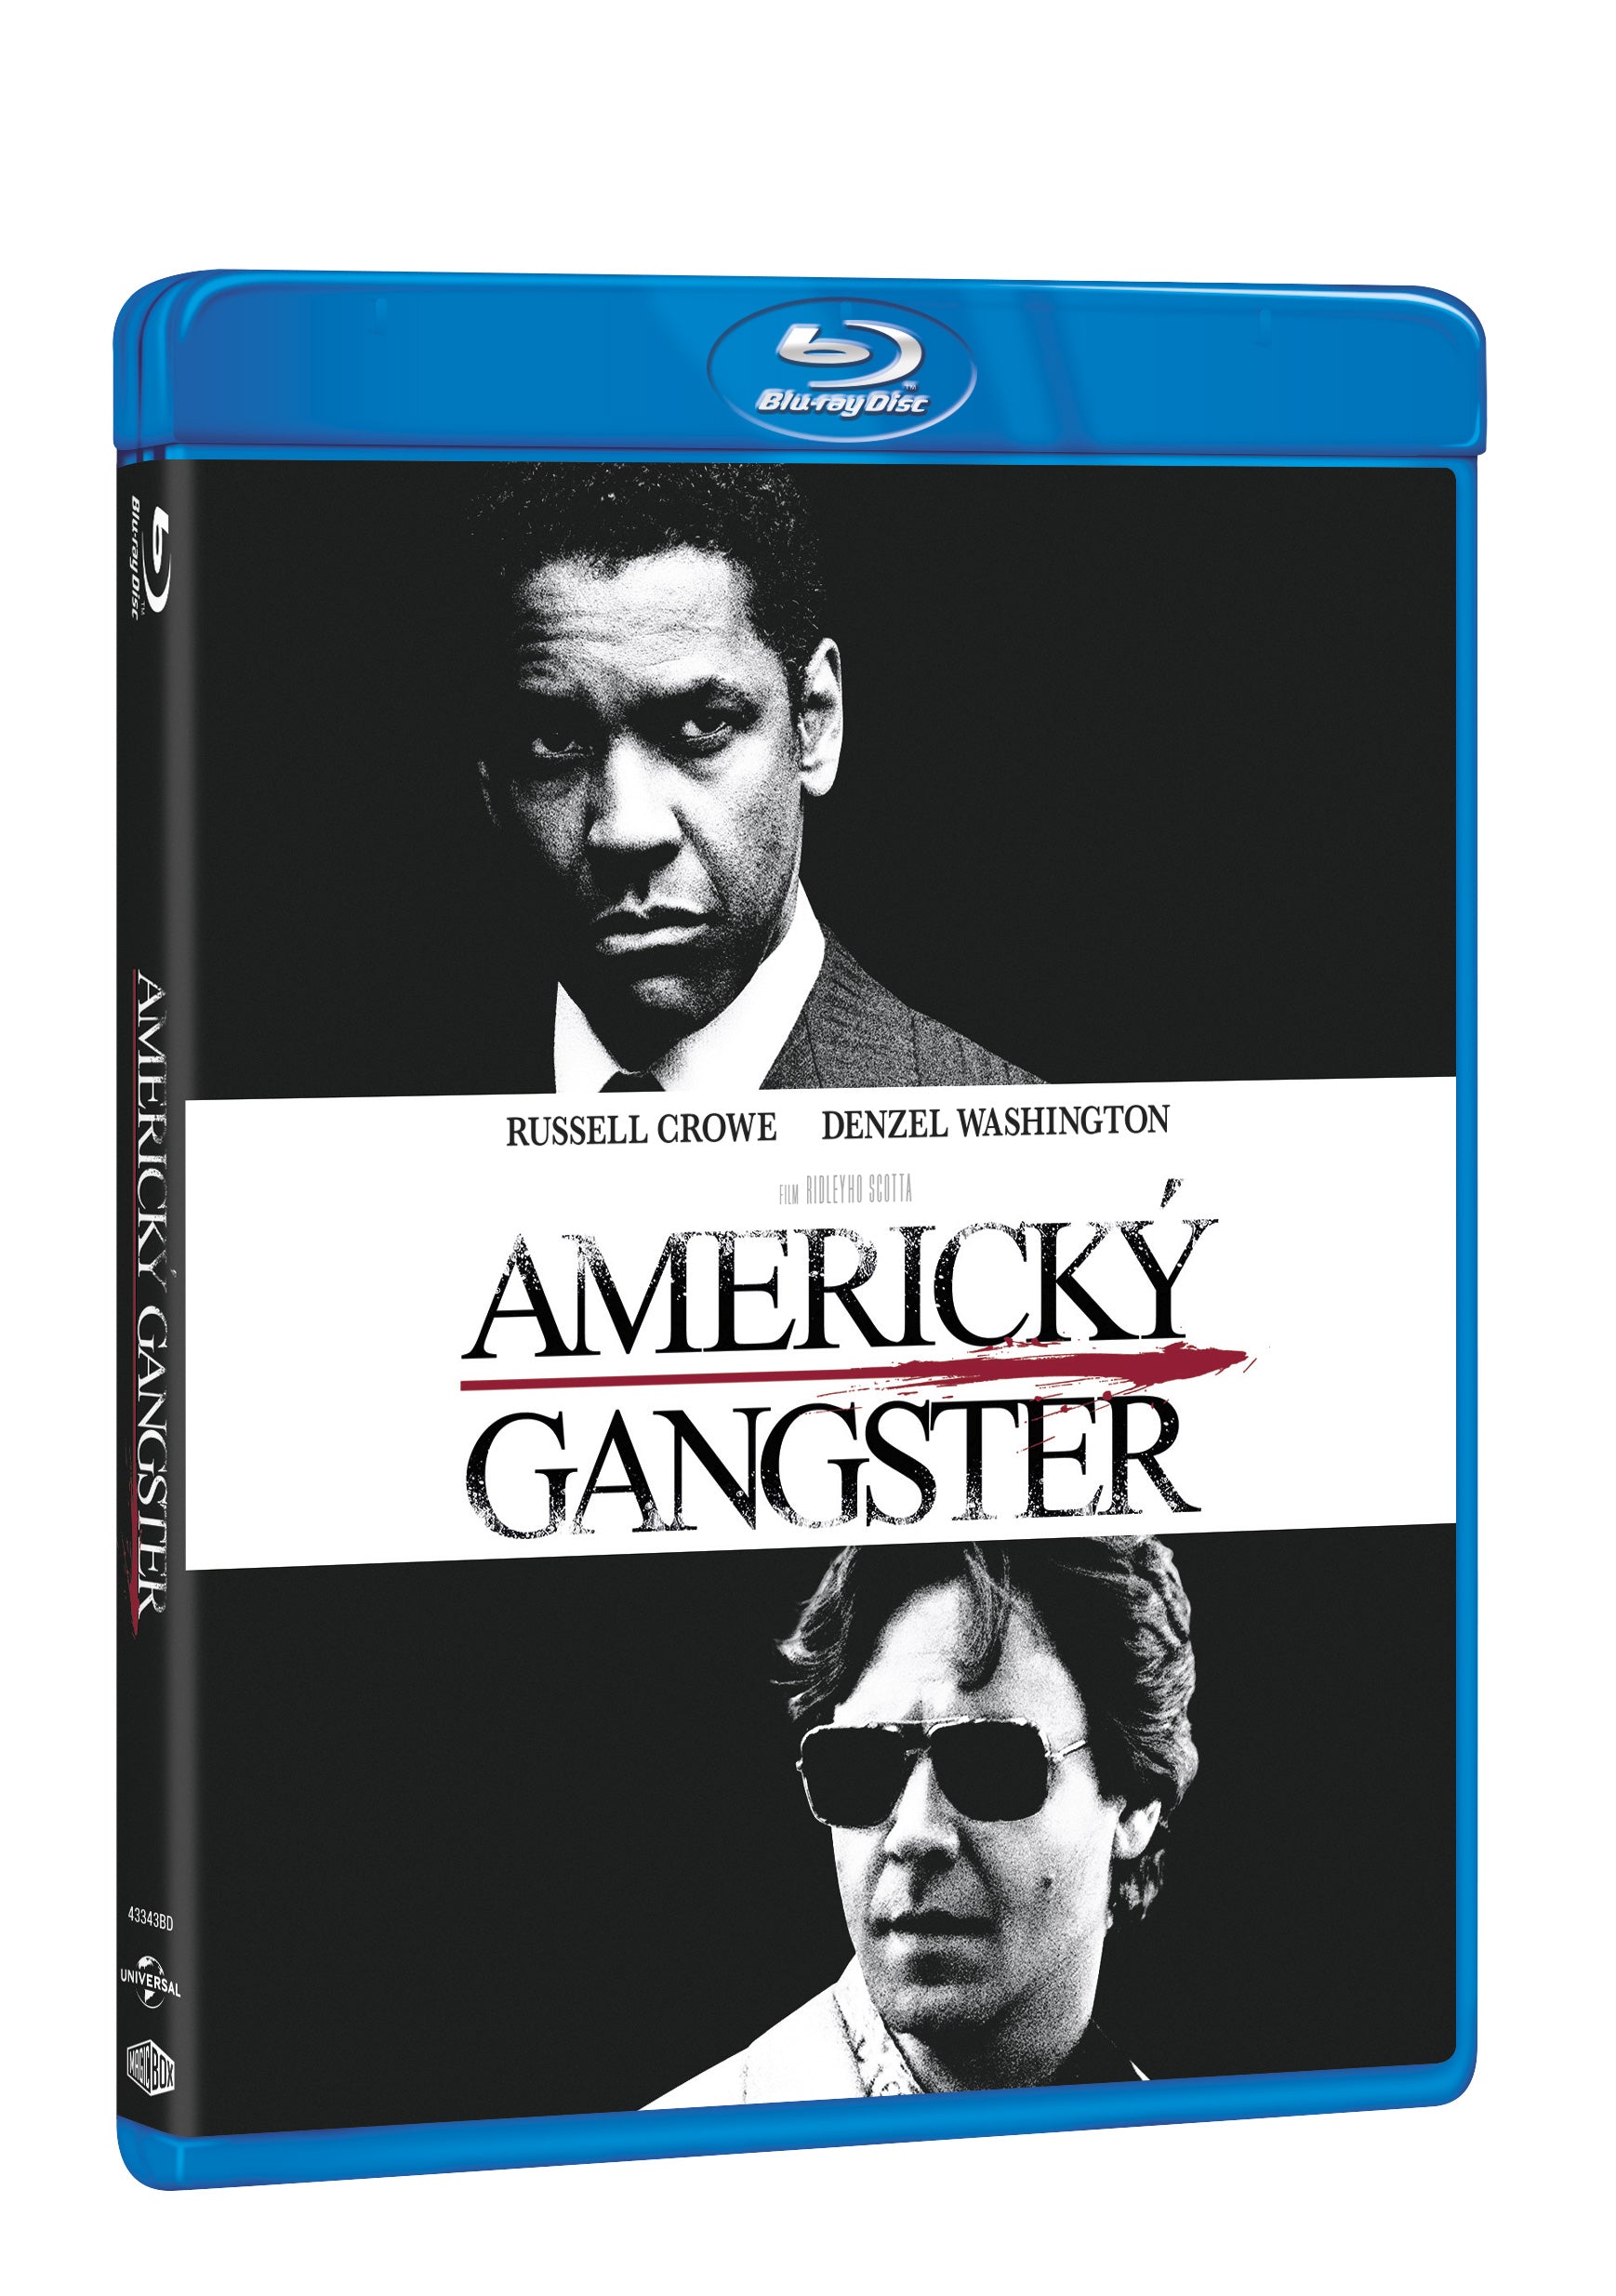 Americky gangster BD / American Gangster - Czech version